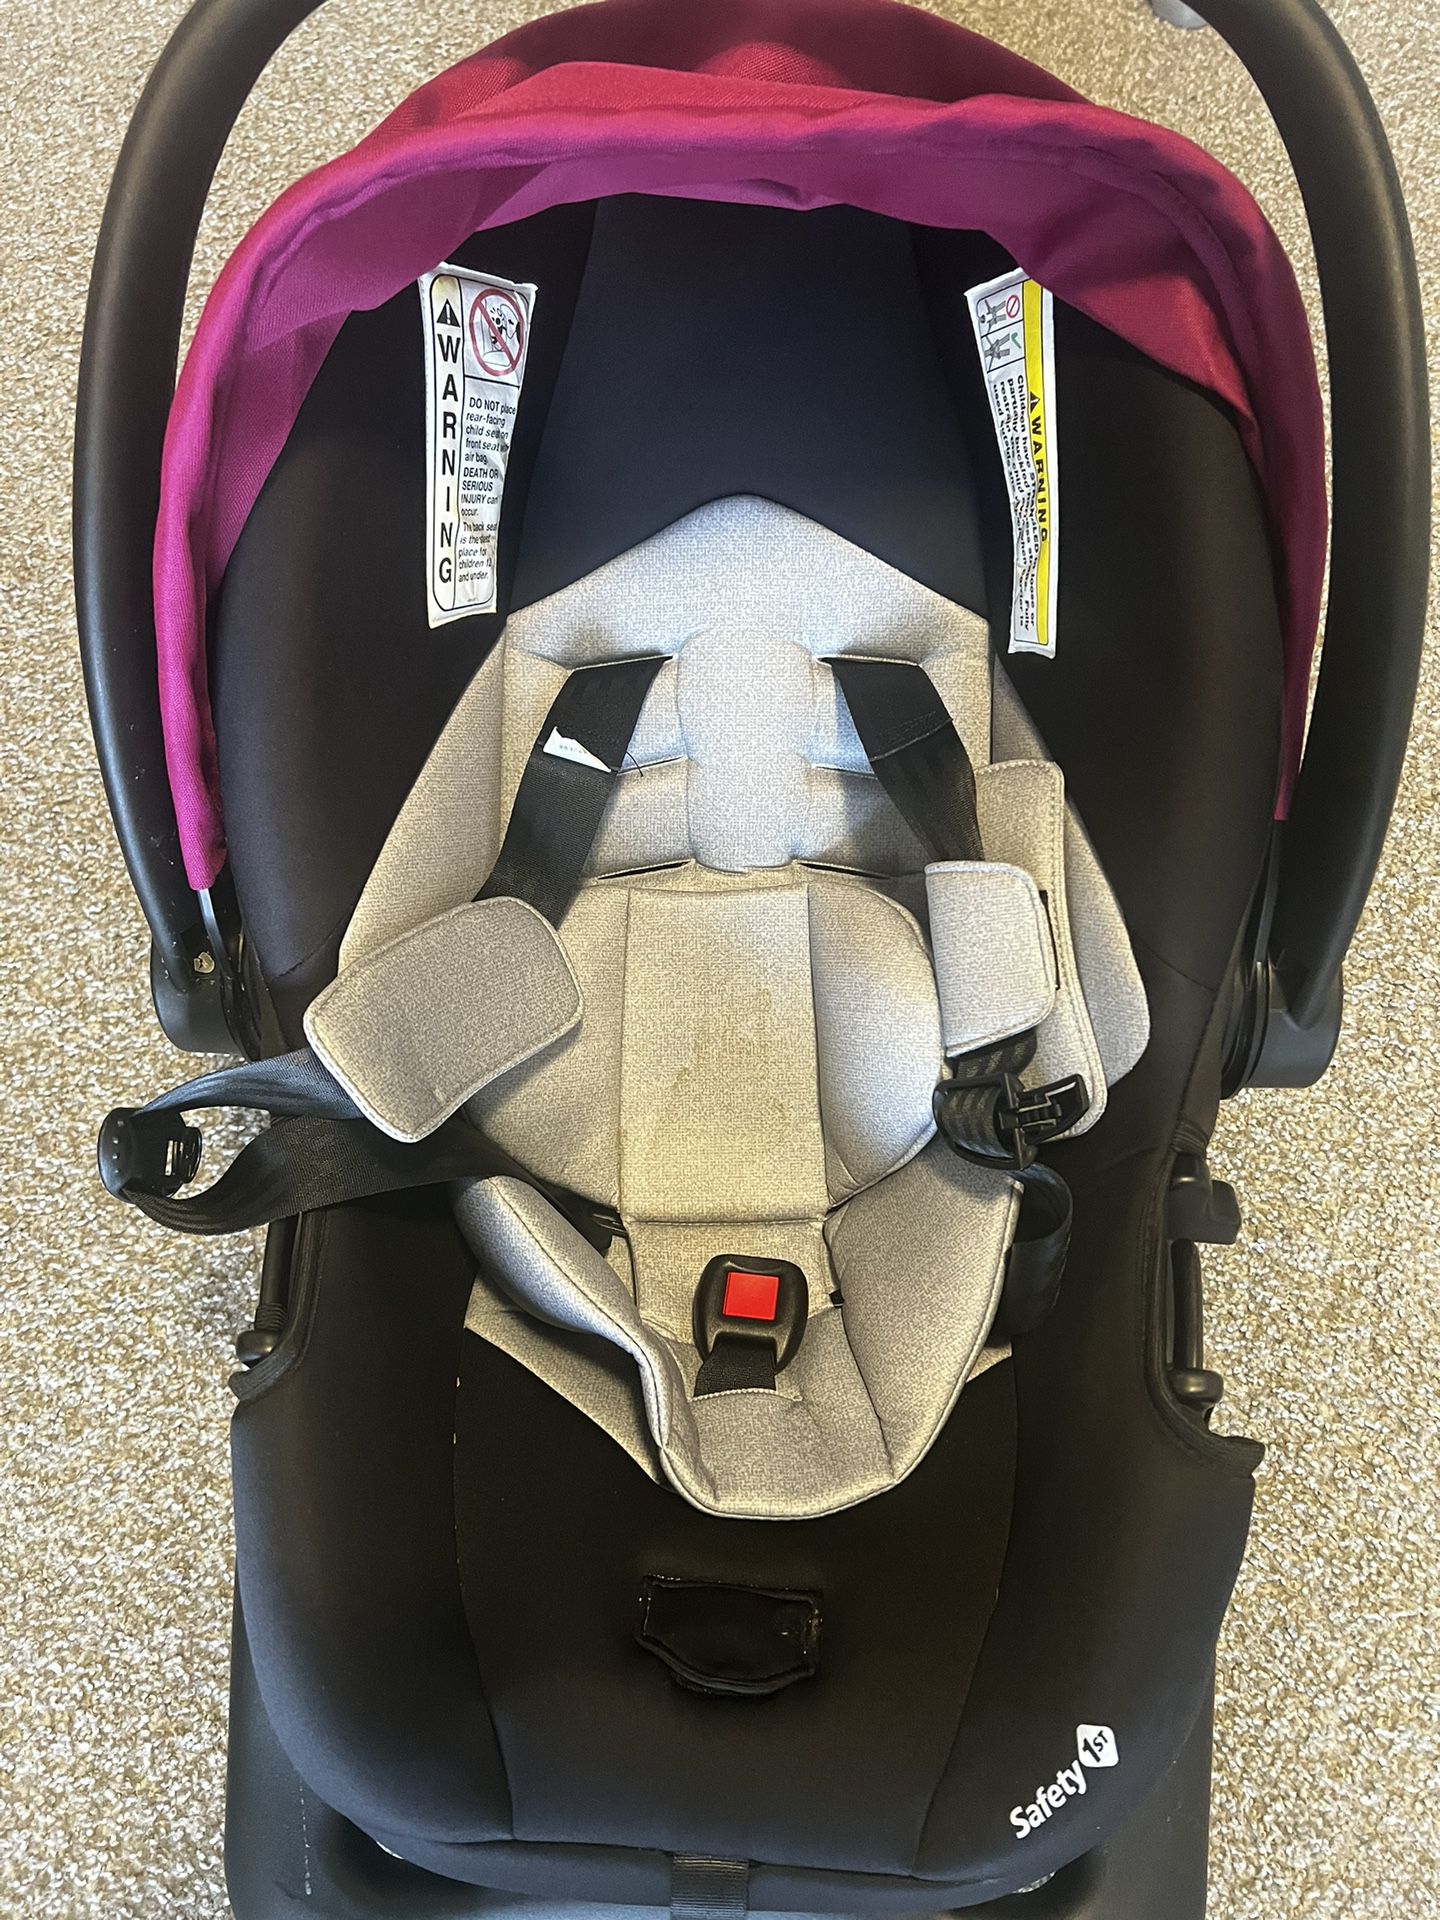 Brand New Baby Car Seat